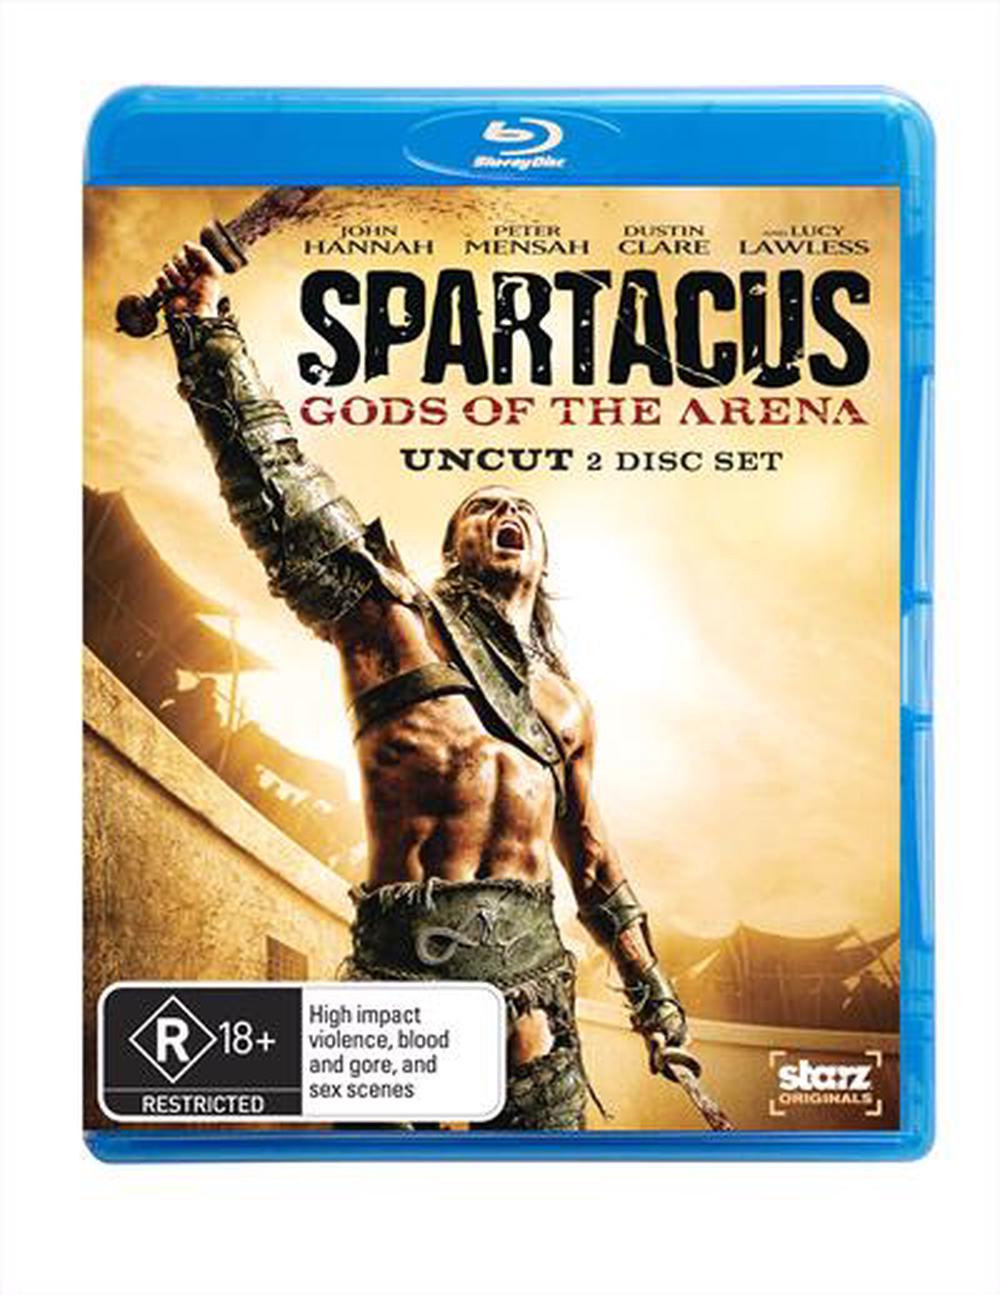 Spartacus gods of the arena online